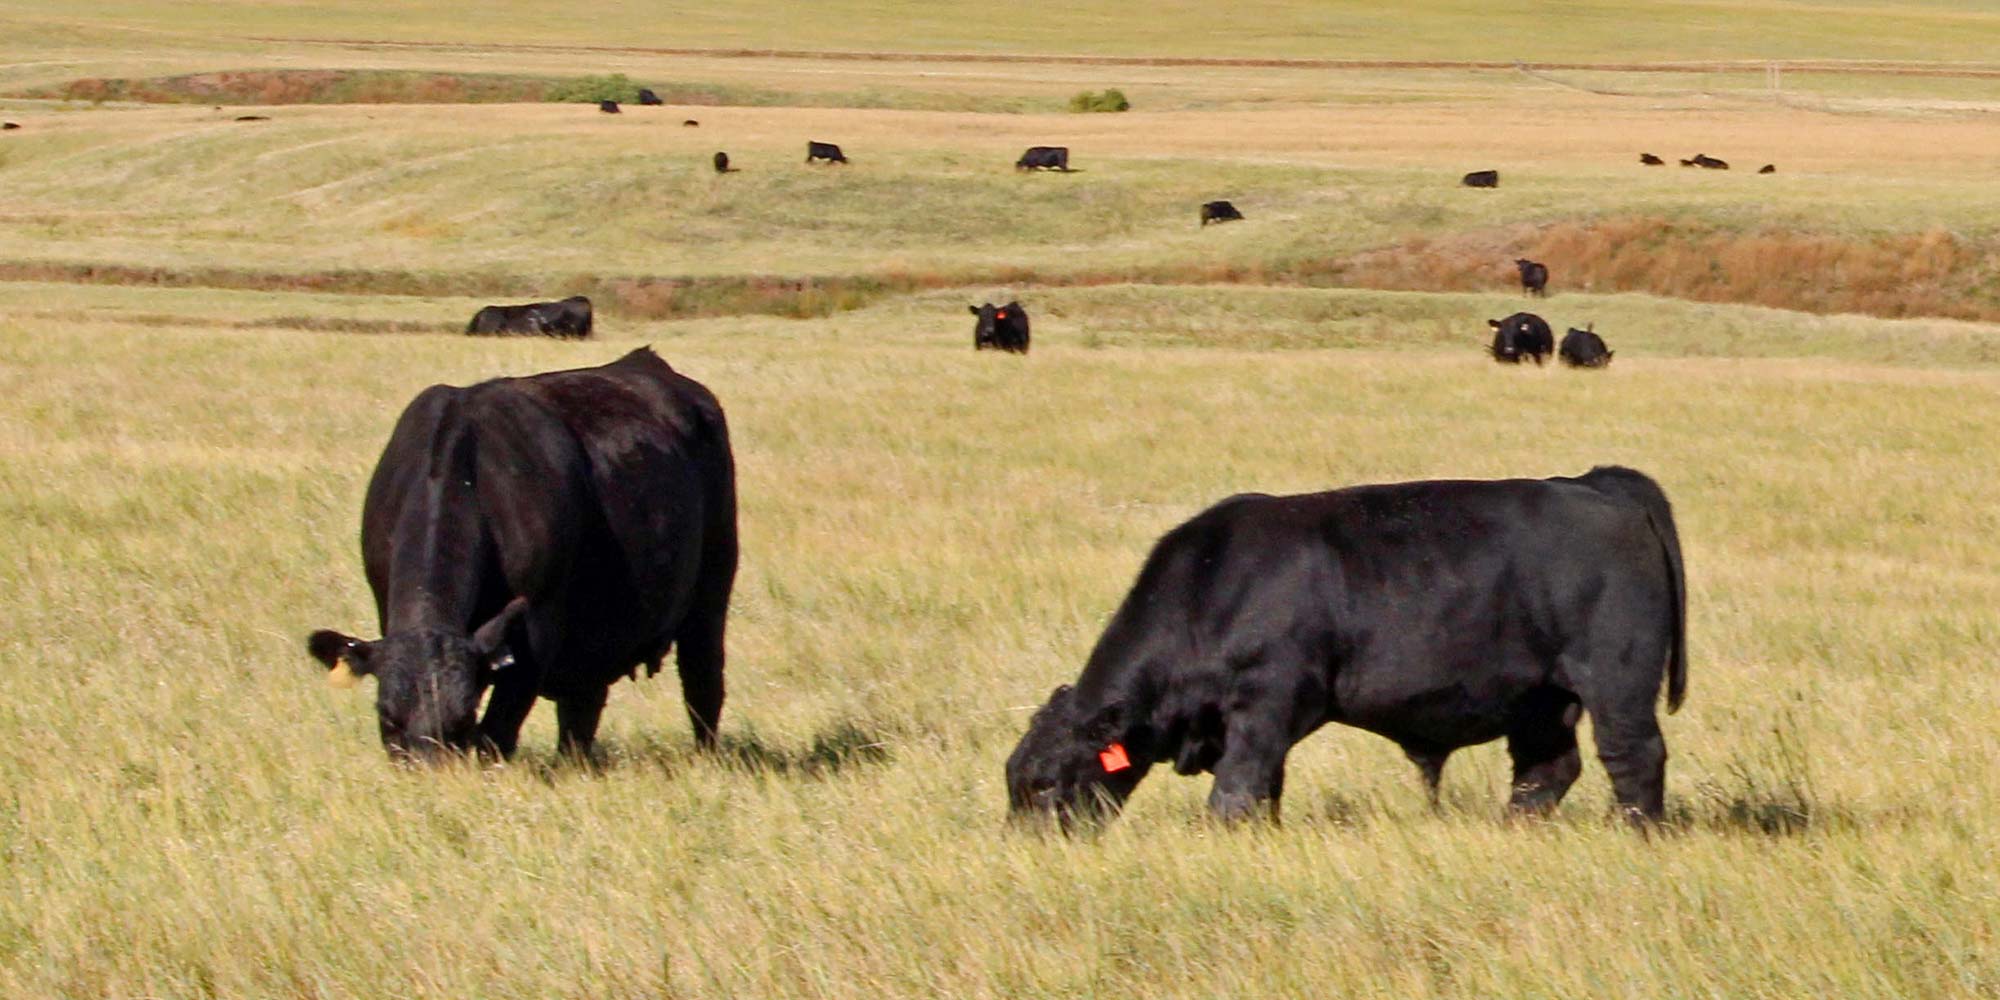 Cow calf in field